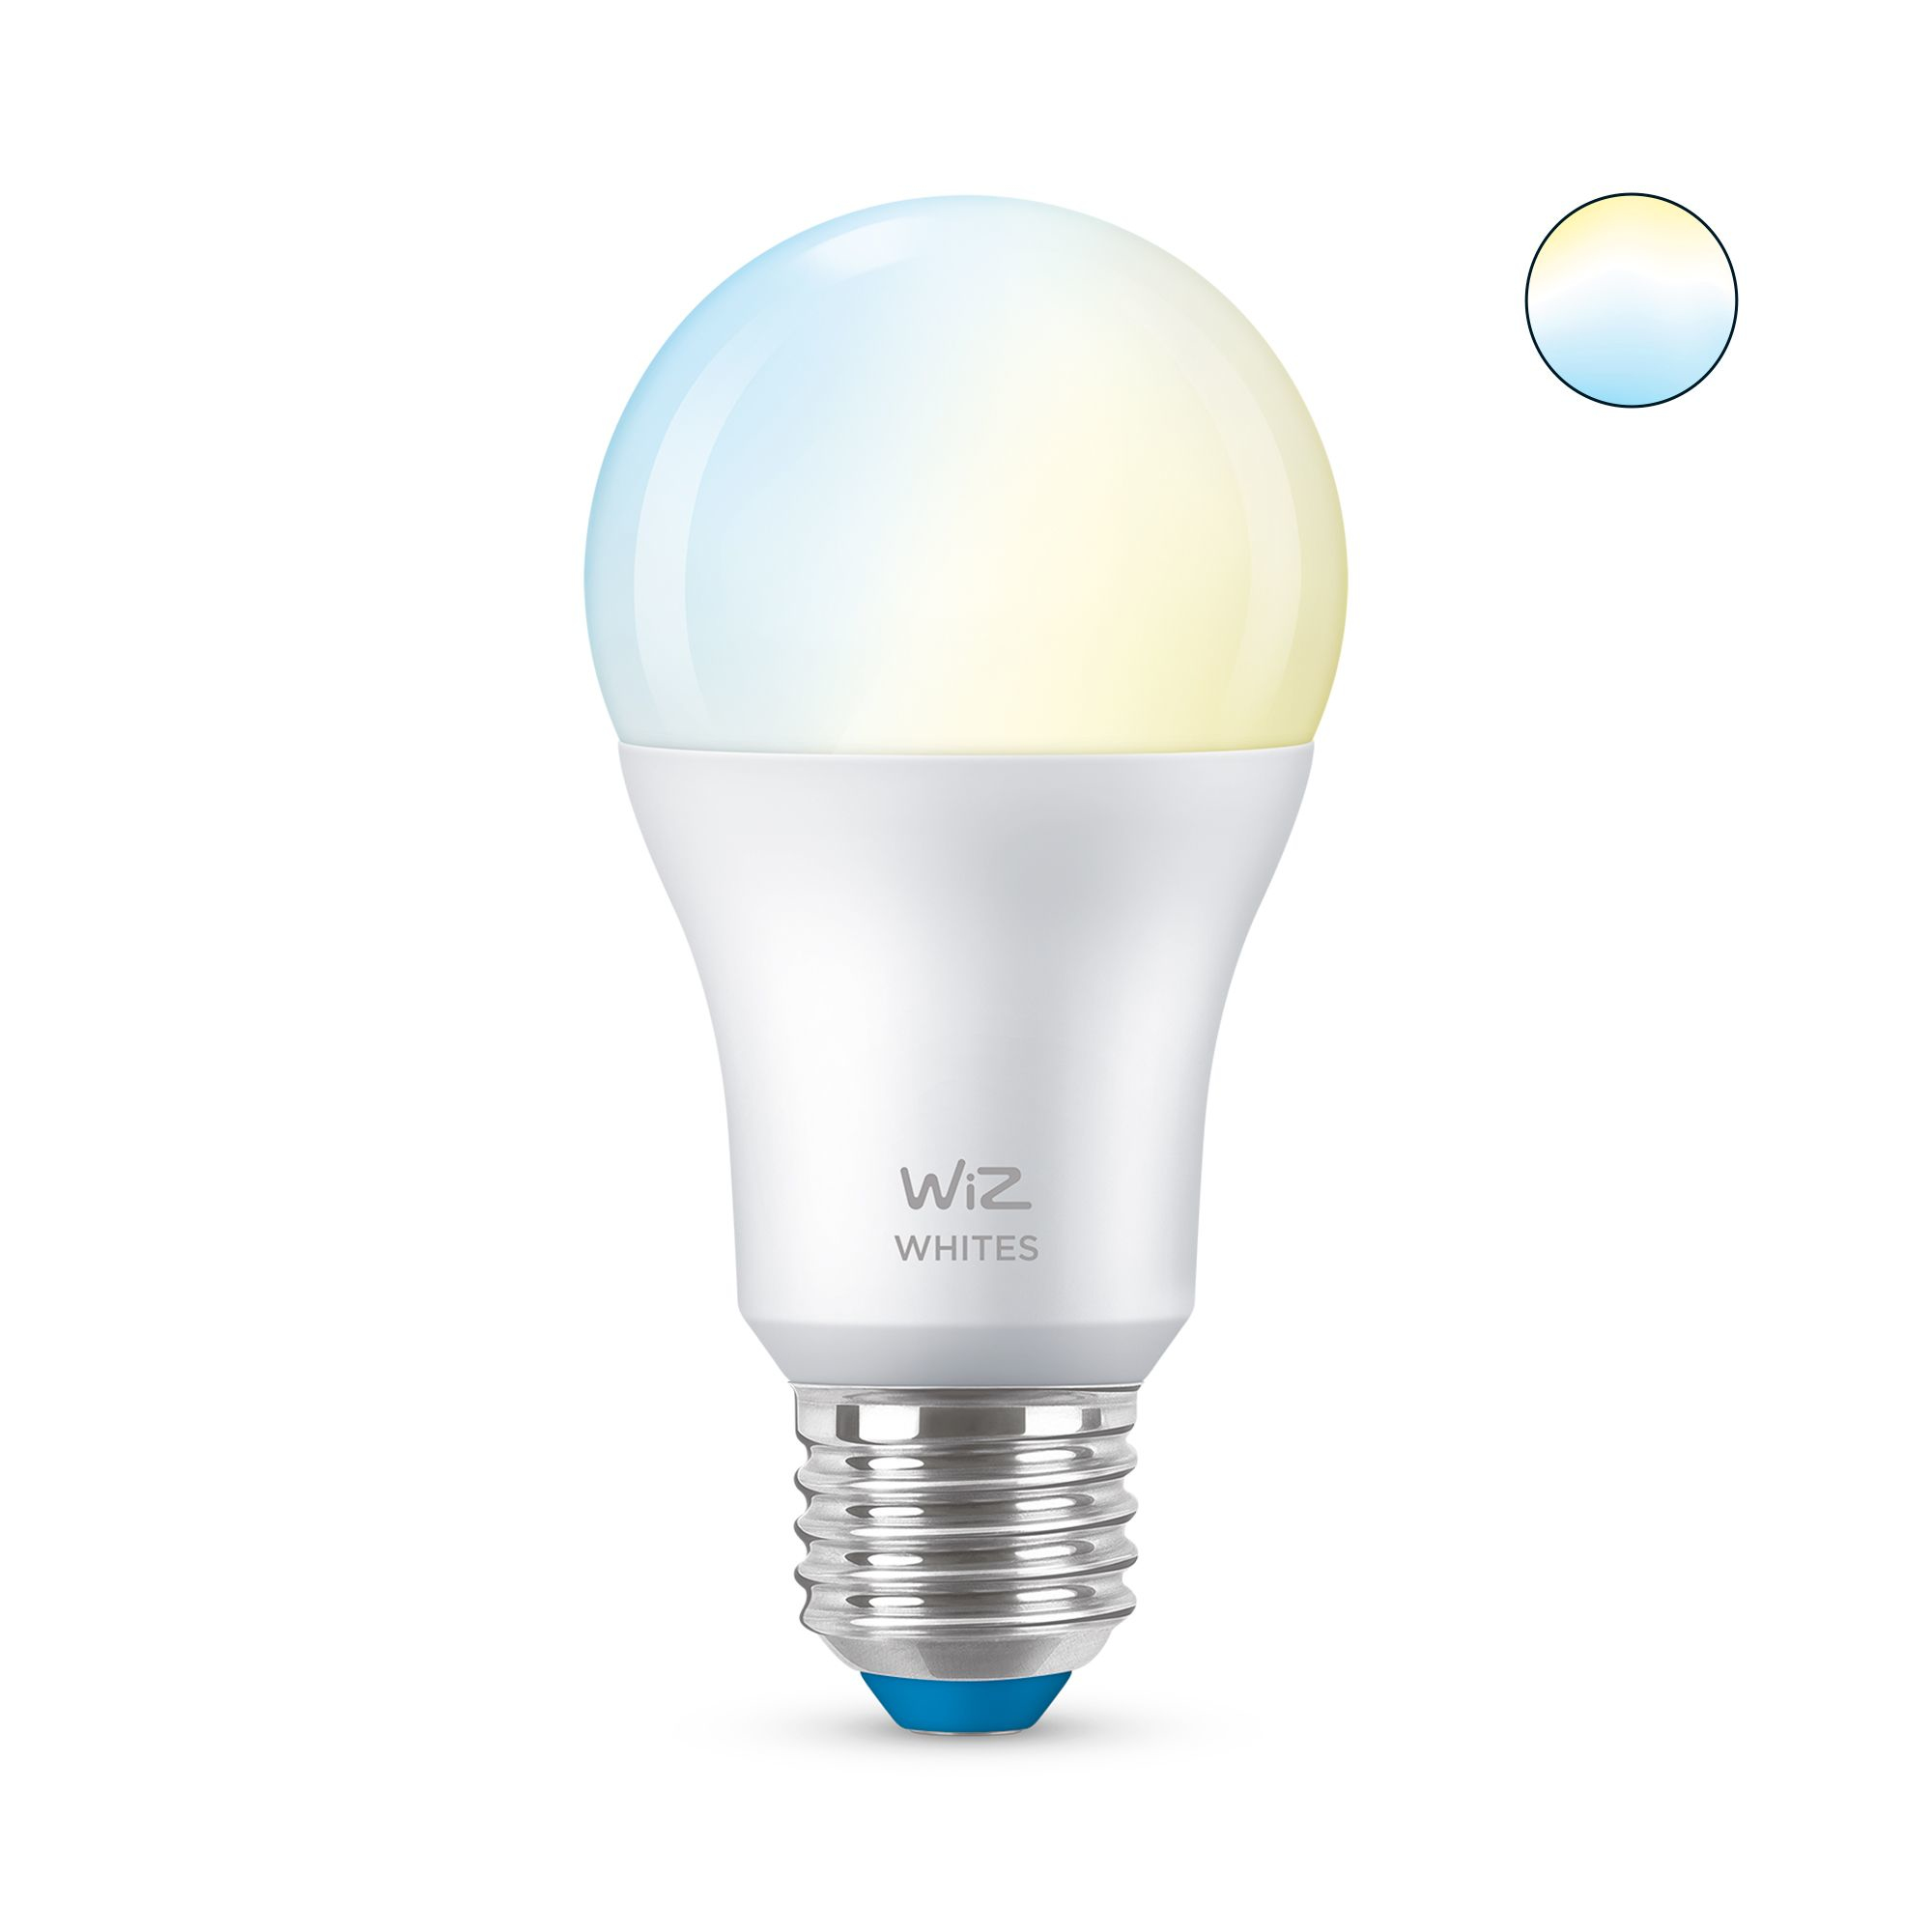 WIZCONNECTED WiZ 8718699787035 - Intelligente Glühbirne - Weiß - WLAN - E27 - Multi - 2700 K